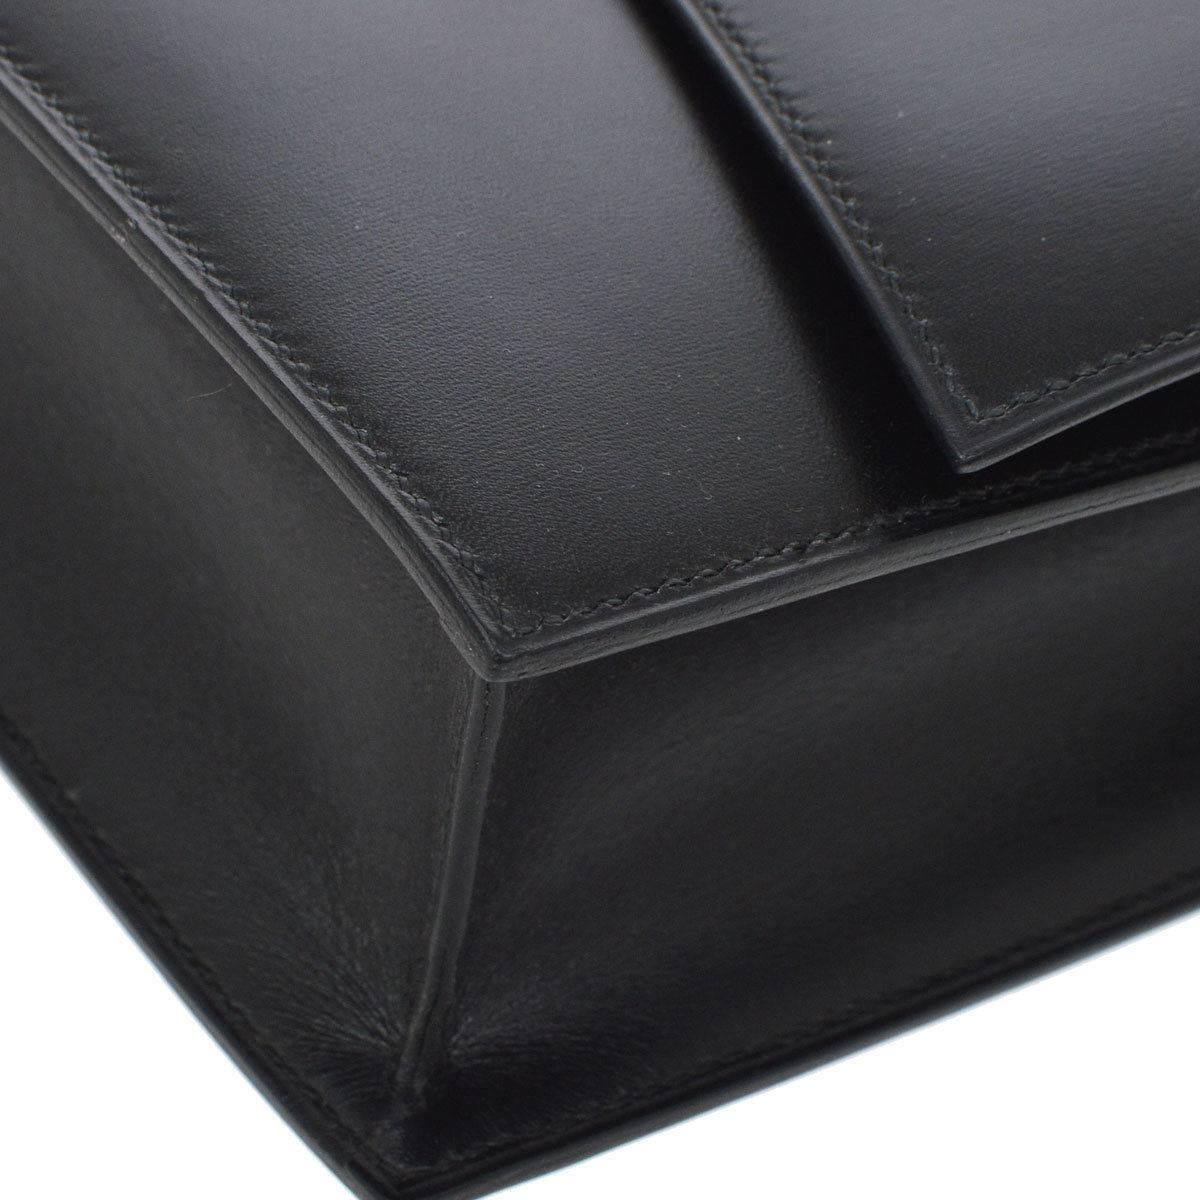 Hermes Black Leather Gold Kelly Style Flip Lock Top Handle Satchel Bag in Box 1